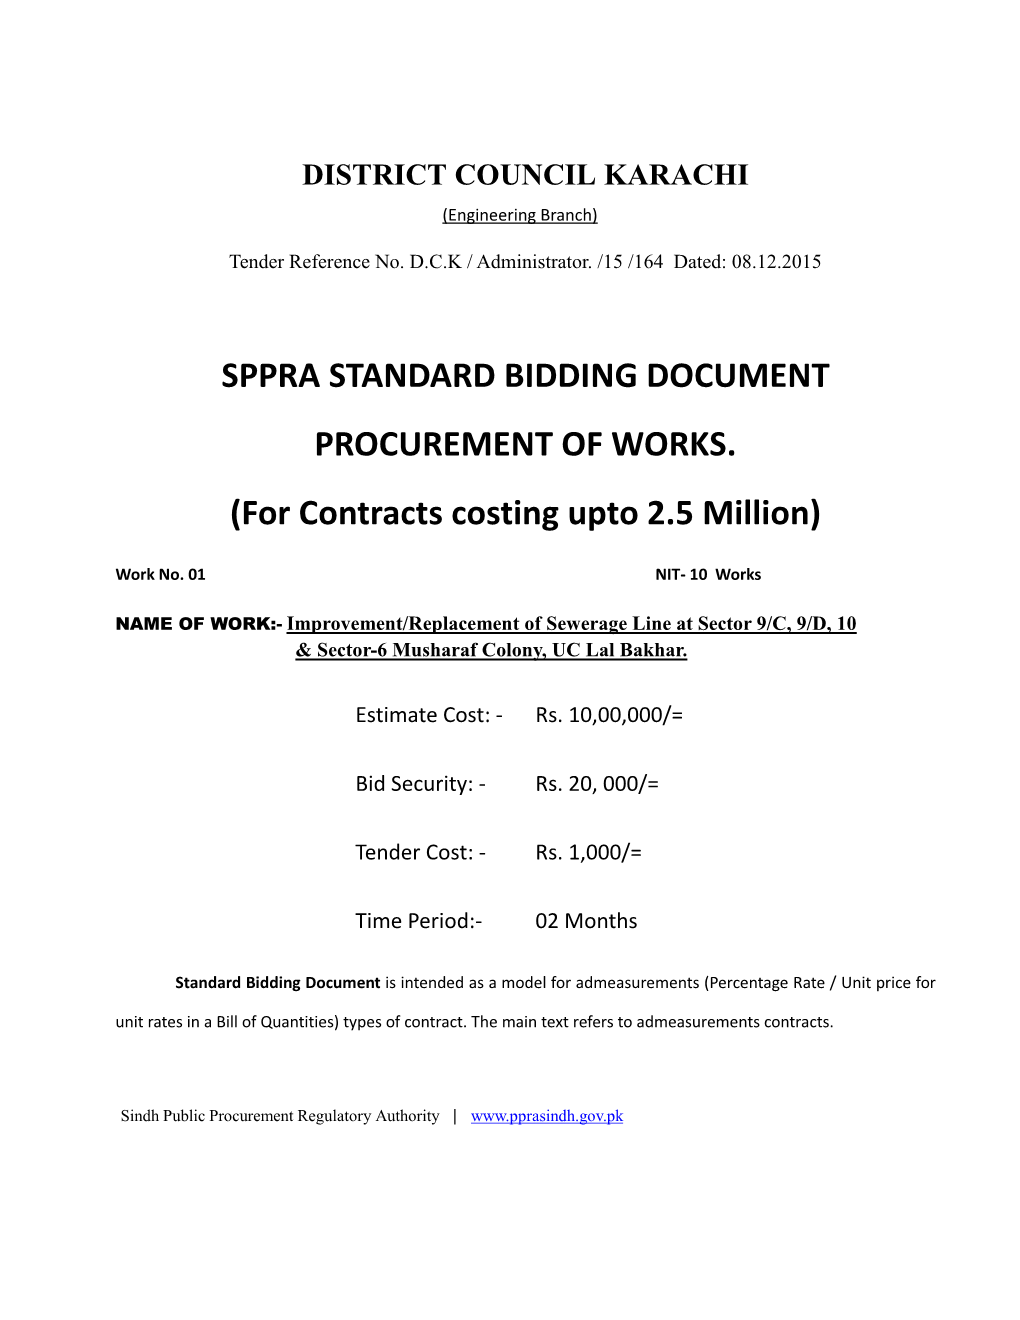 Sppra Standard Bidding Document Procurement of Works